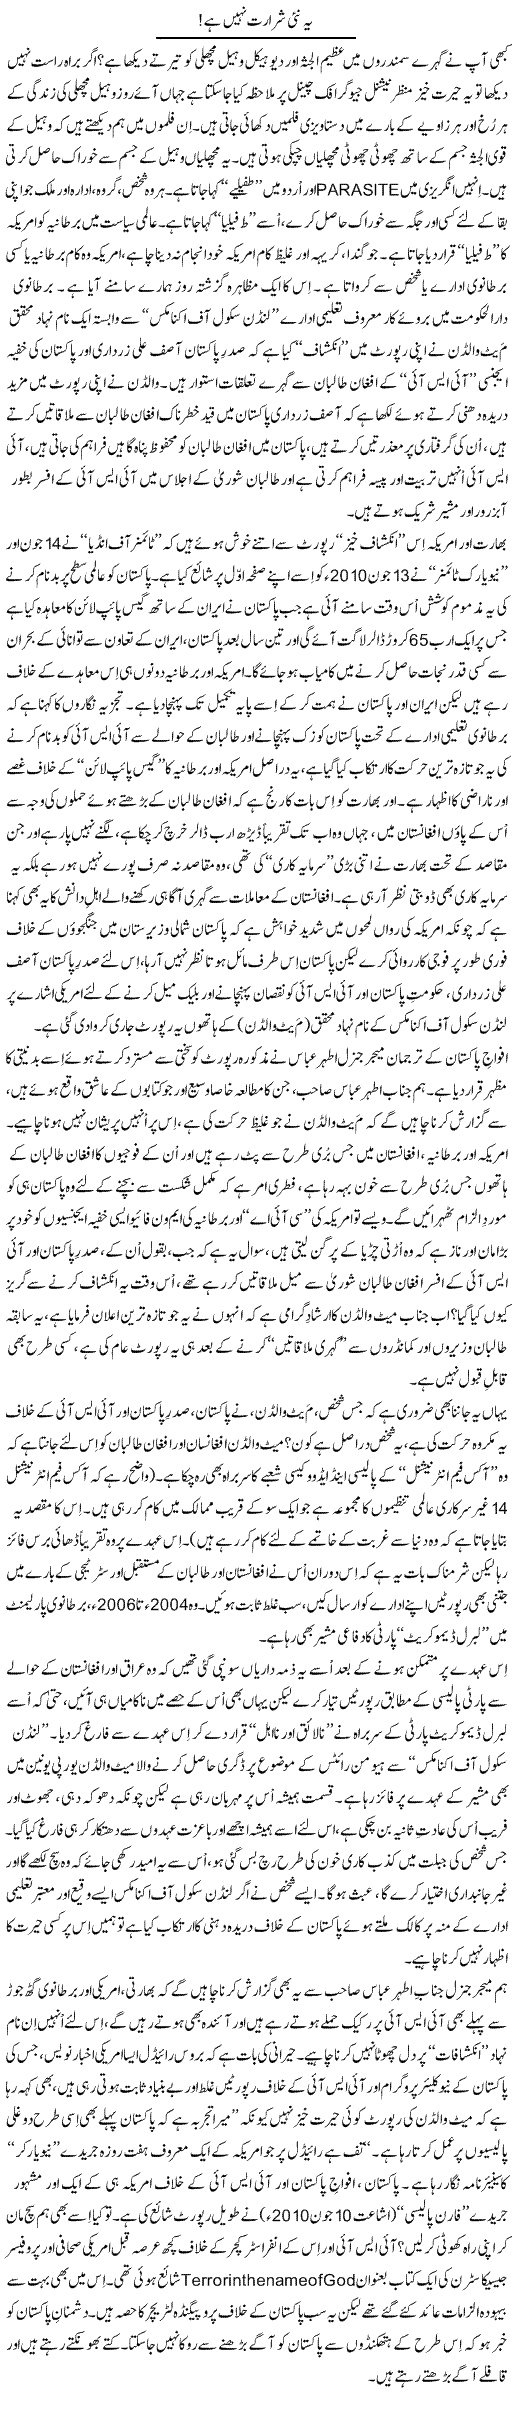 Nai Shiraraat Express Column Tanvir Qasir 16 June 2010